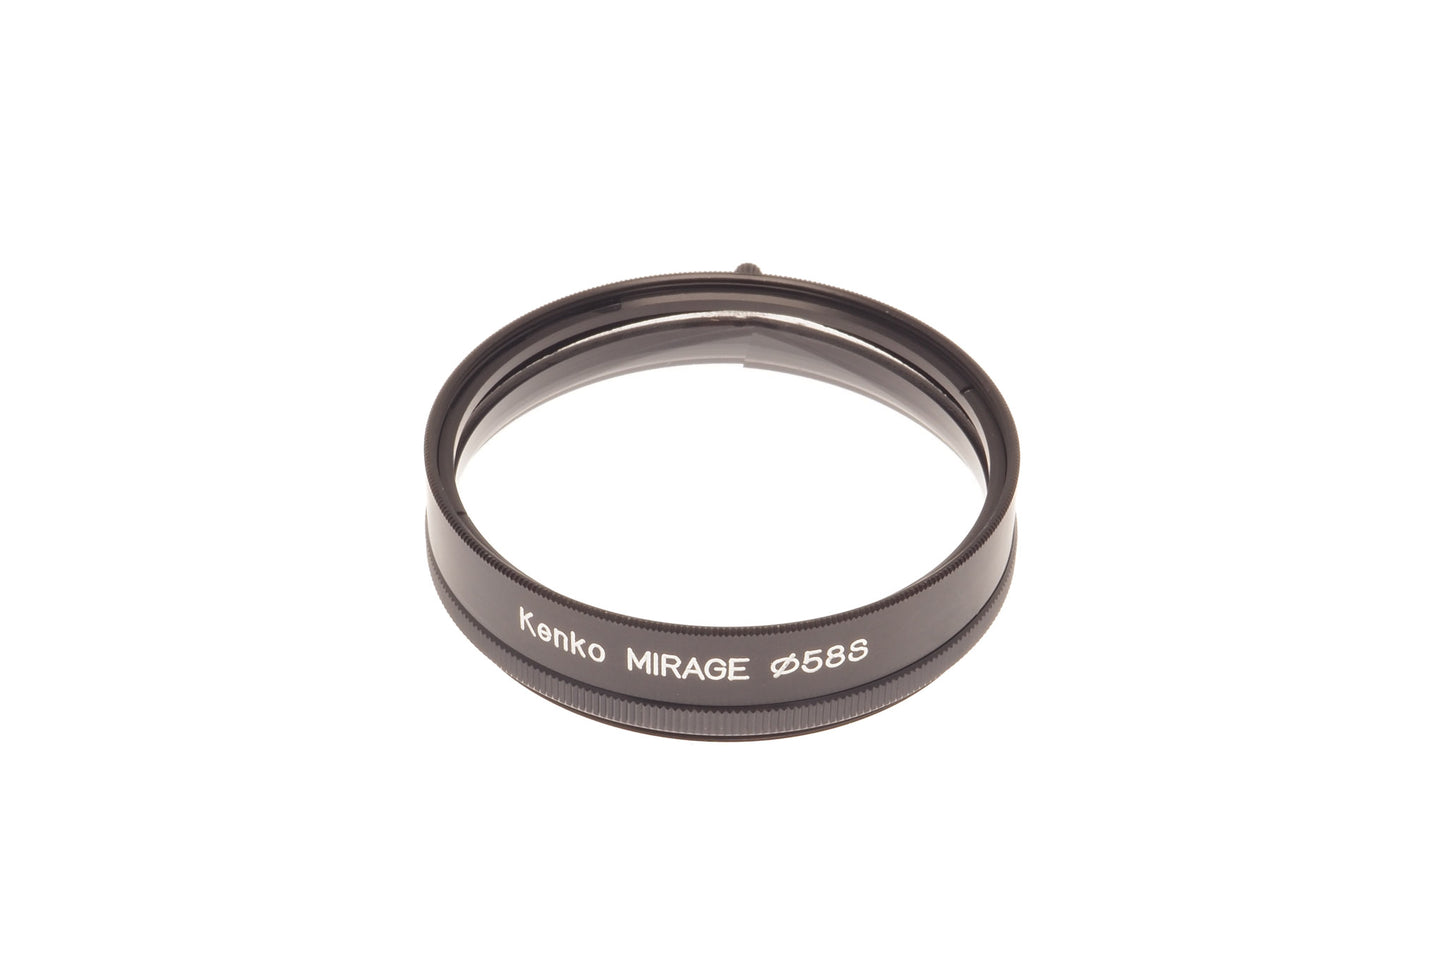 Kenko Mirage Lens 58S - Accessory